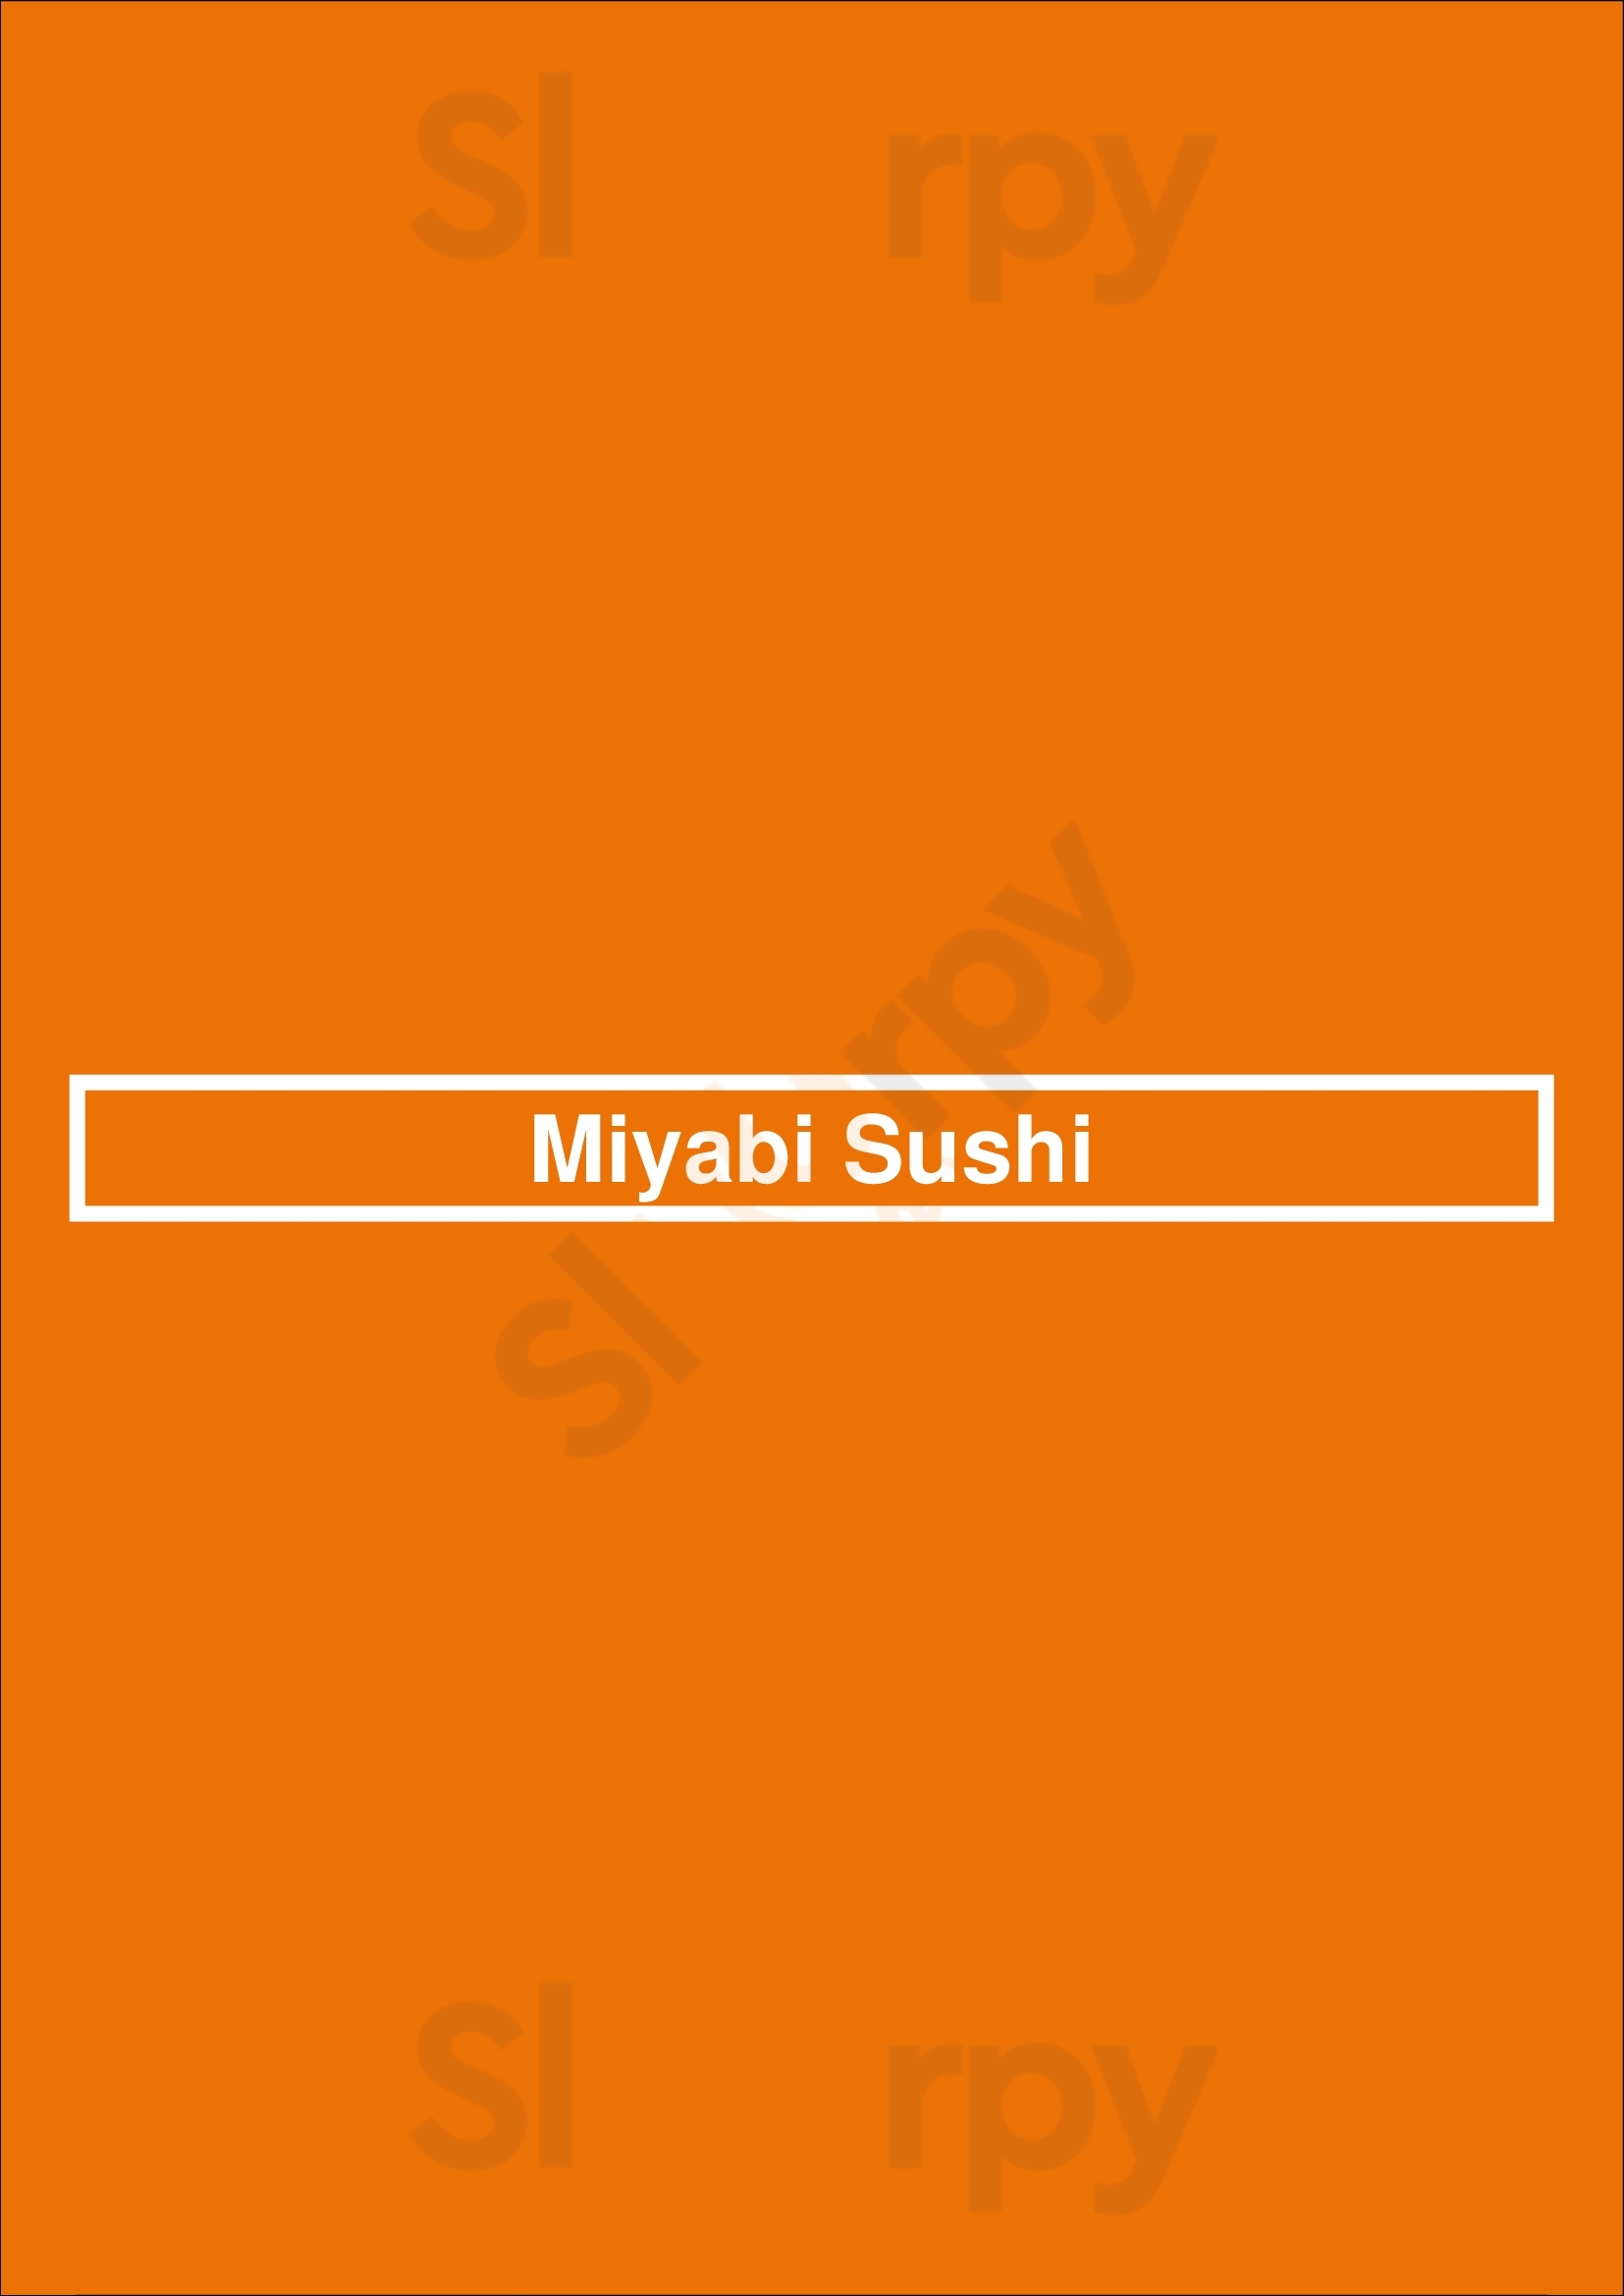 Miyabi Sushi Houston Menu - 1